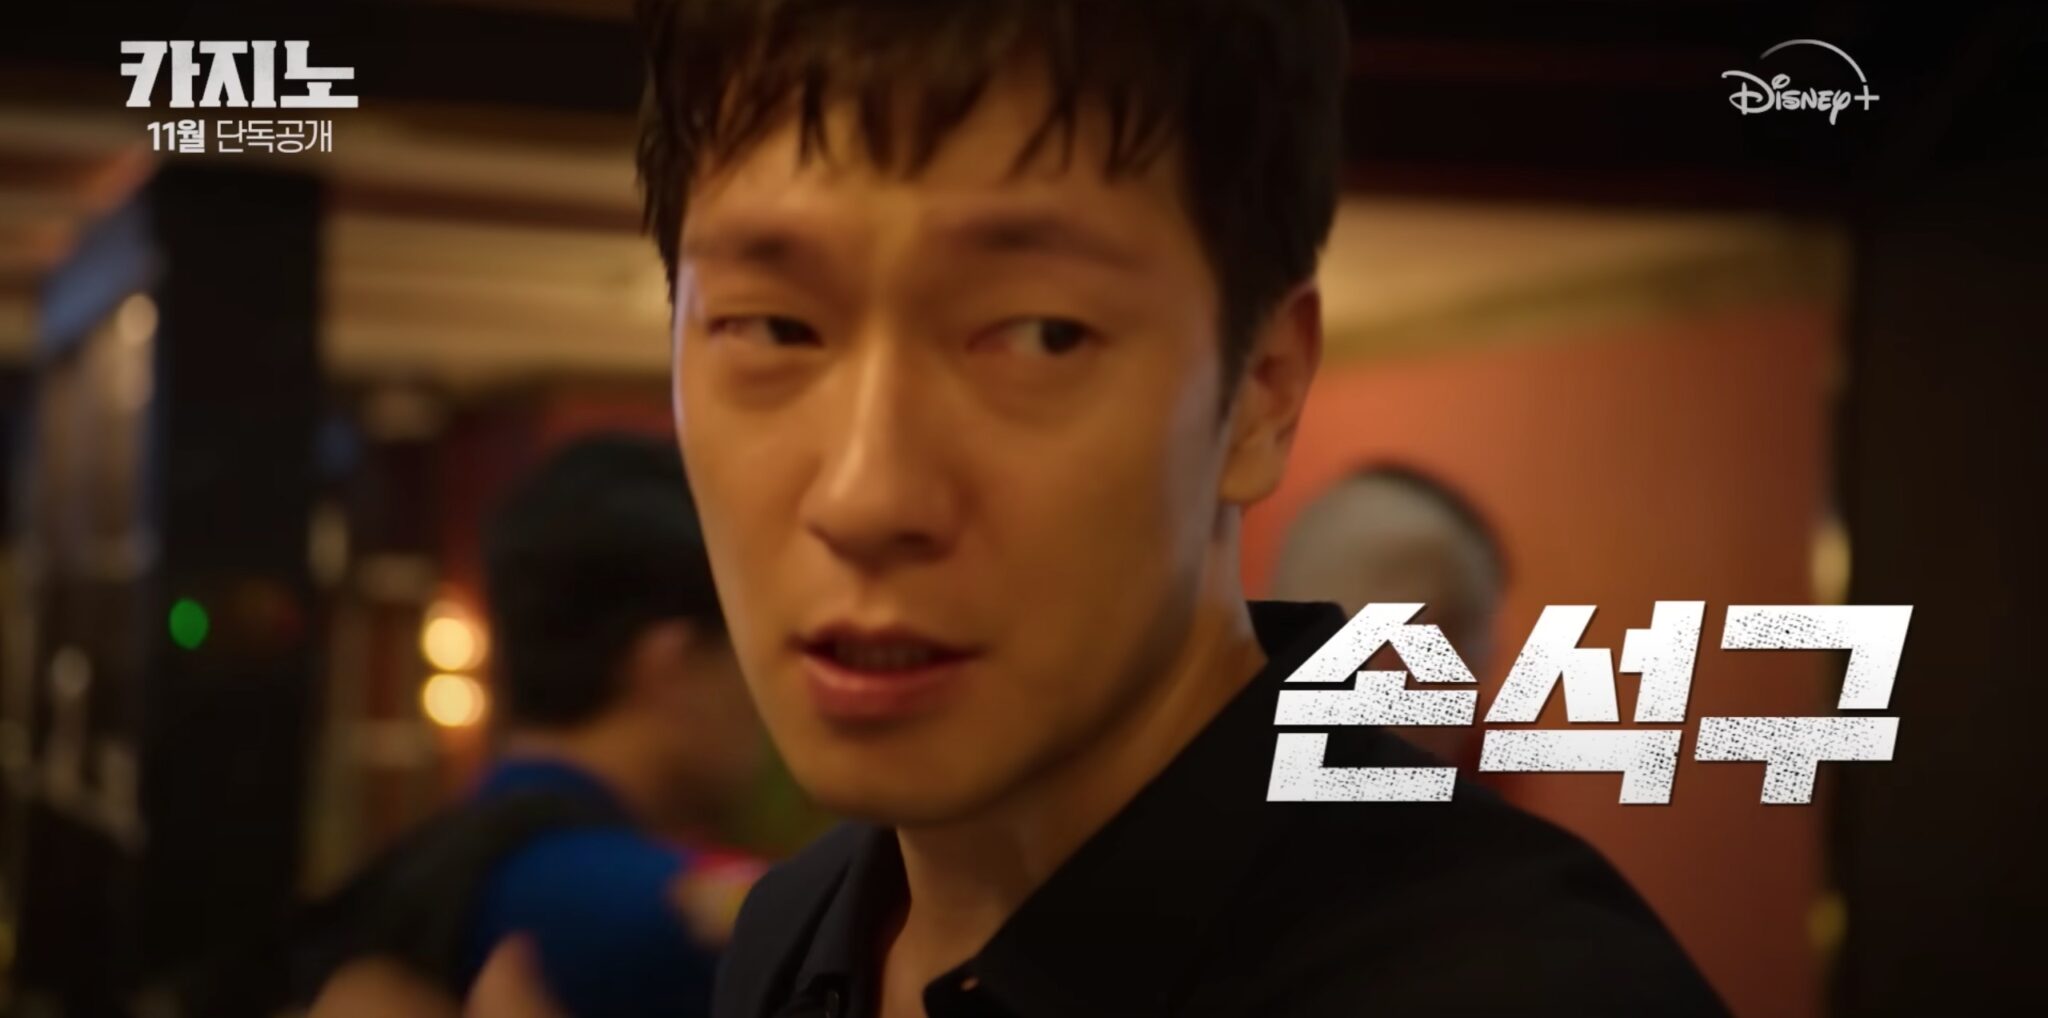 Choi Min-shik takes a gamble on himself in Disney+'s Casino